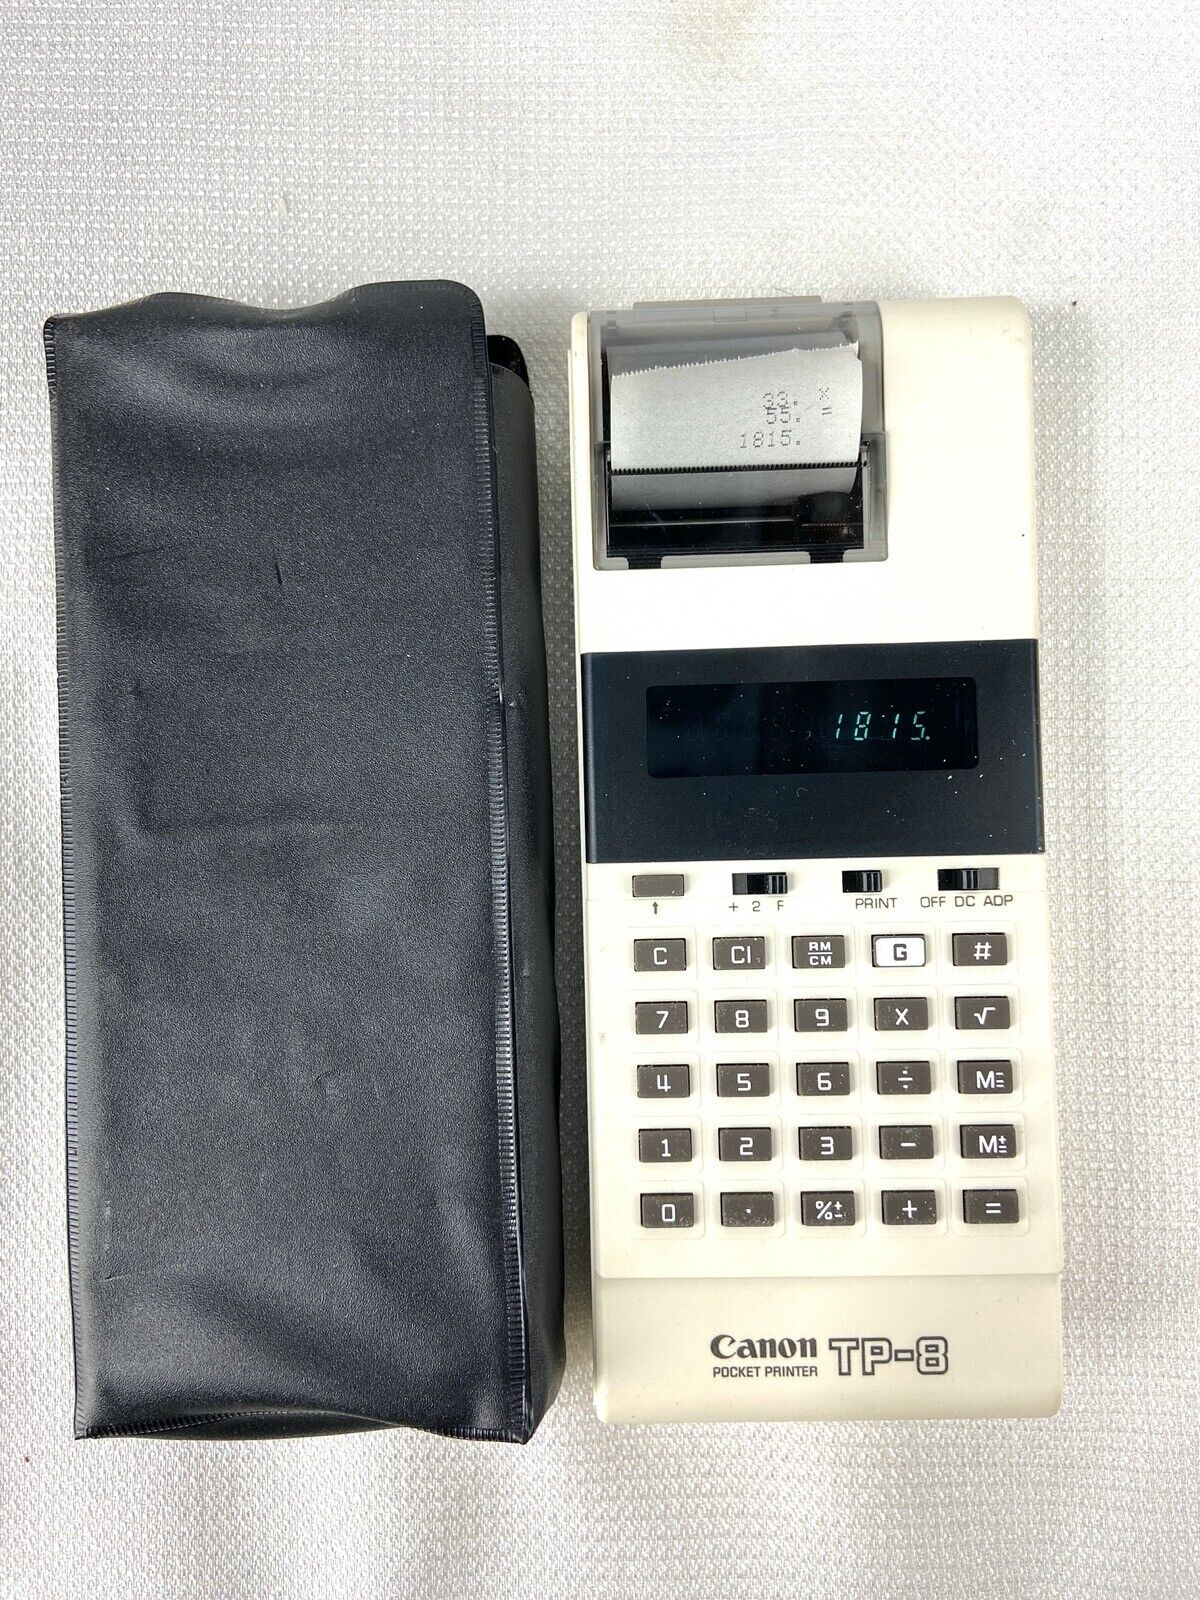 Canon TP-8 Pocket Printer Calculator